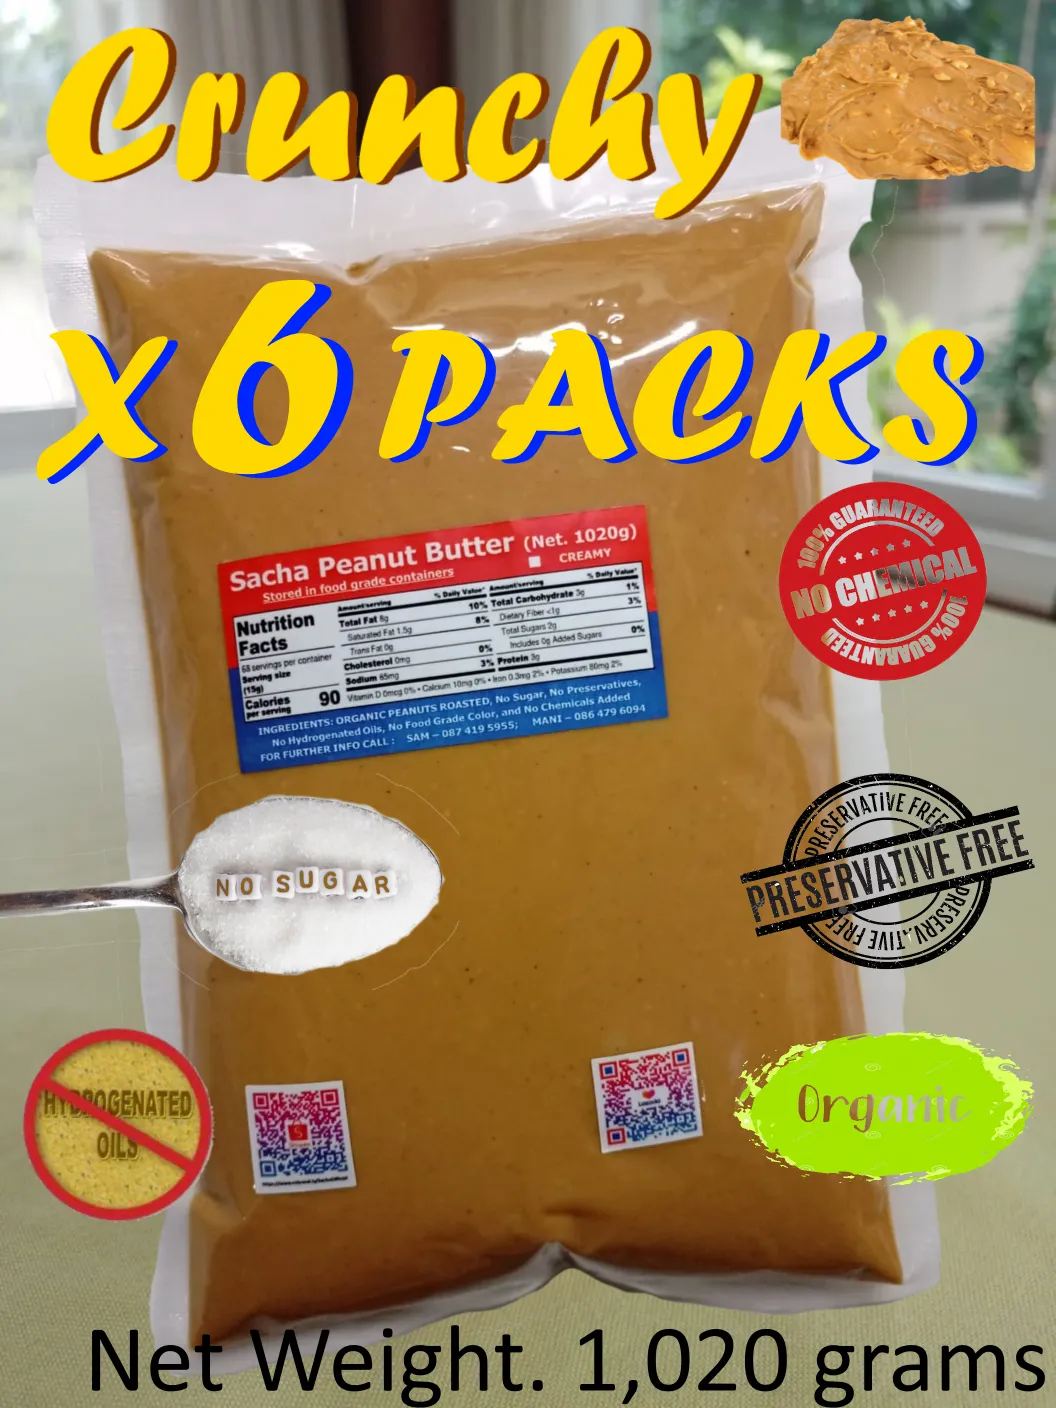 Sacha Peanut Butter (Crunchy x 6 Packs) All Natural Organic (1,020 grams x 6 แพ็ค) - Free Delivery, ซาช่า-เนยถั่ว (ส่งฟรี)